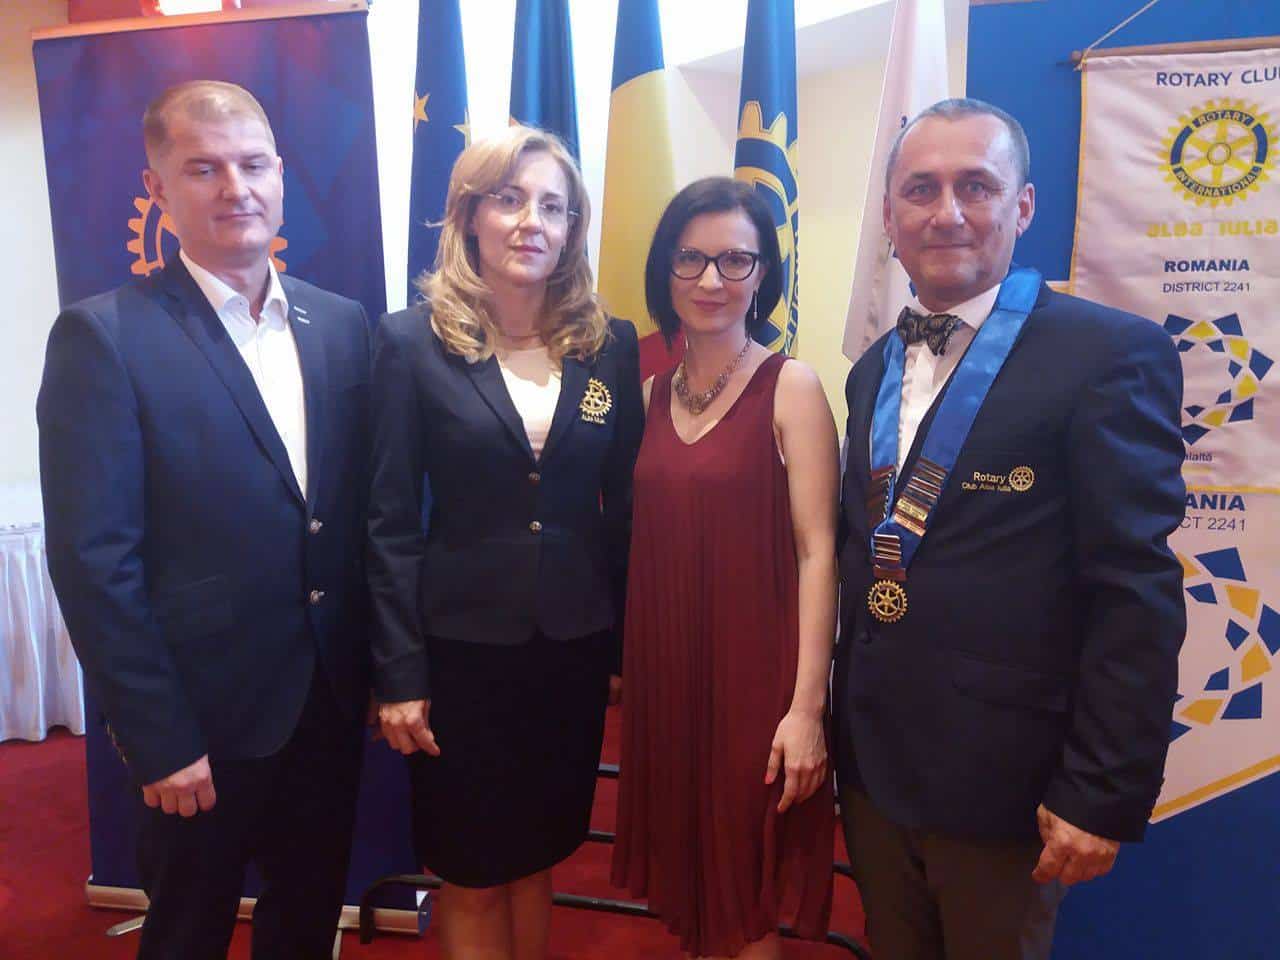 Rotary Club Cluj-Napoca, Romania